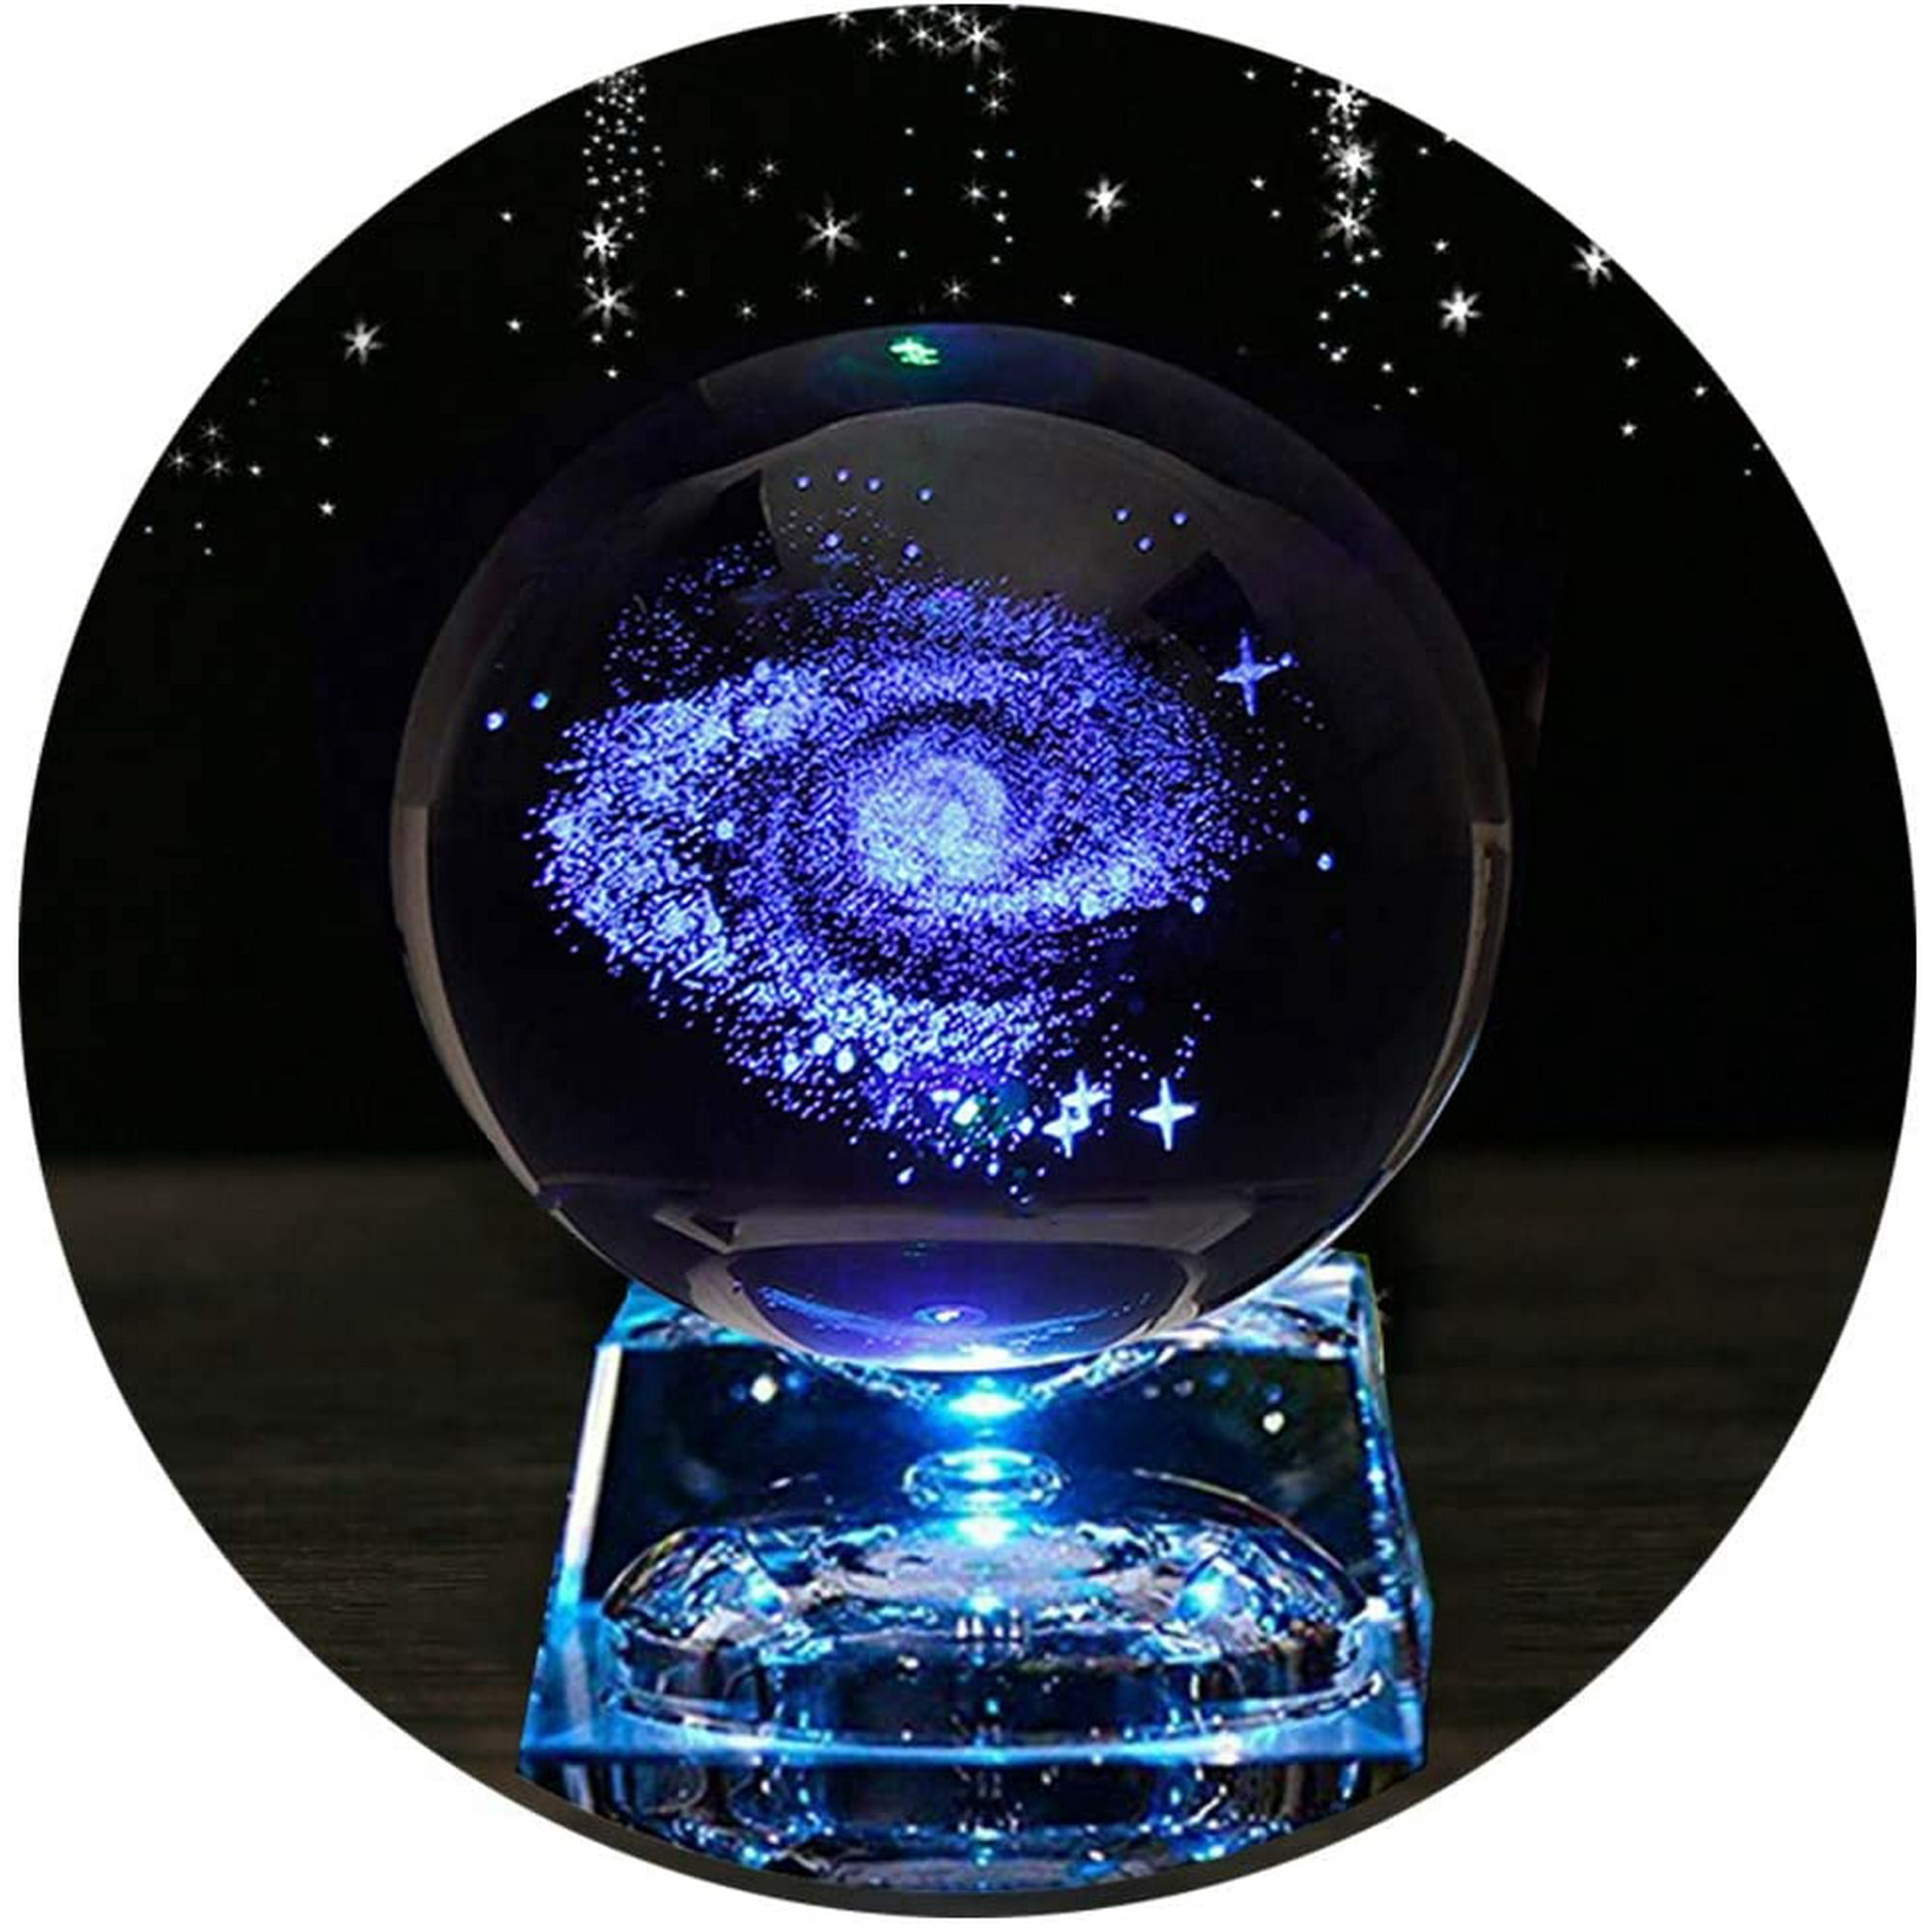 Crystal galaxy. Хрустальный шар. Хрустальный шар Галактика. Хрустальный шар с подсветкой. Космический шар.